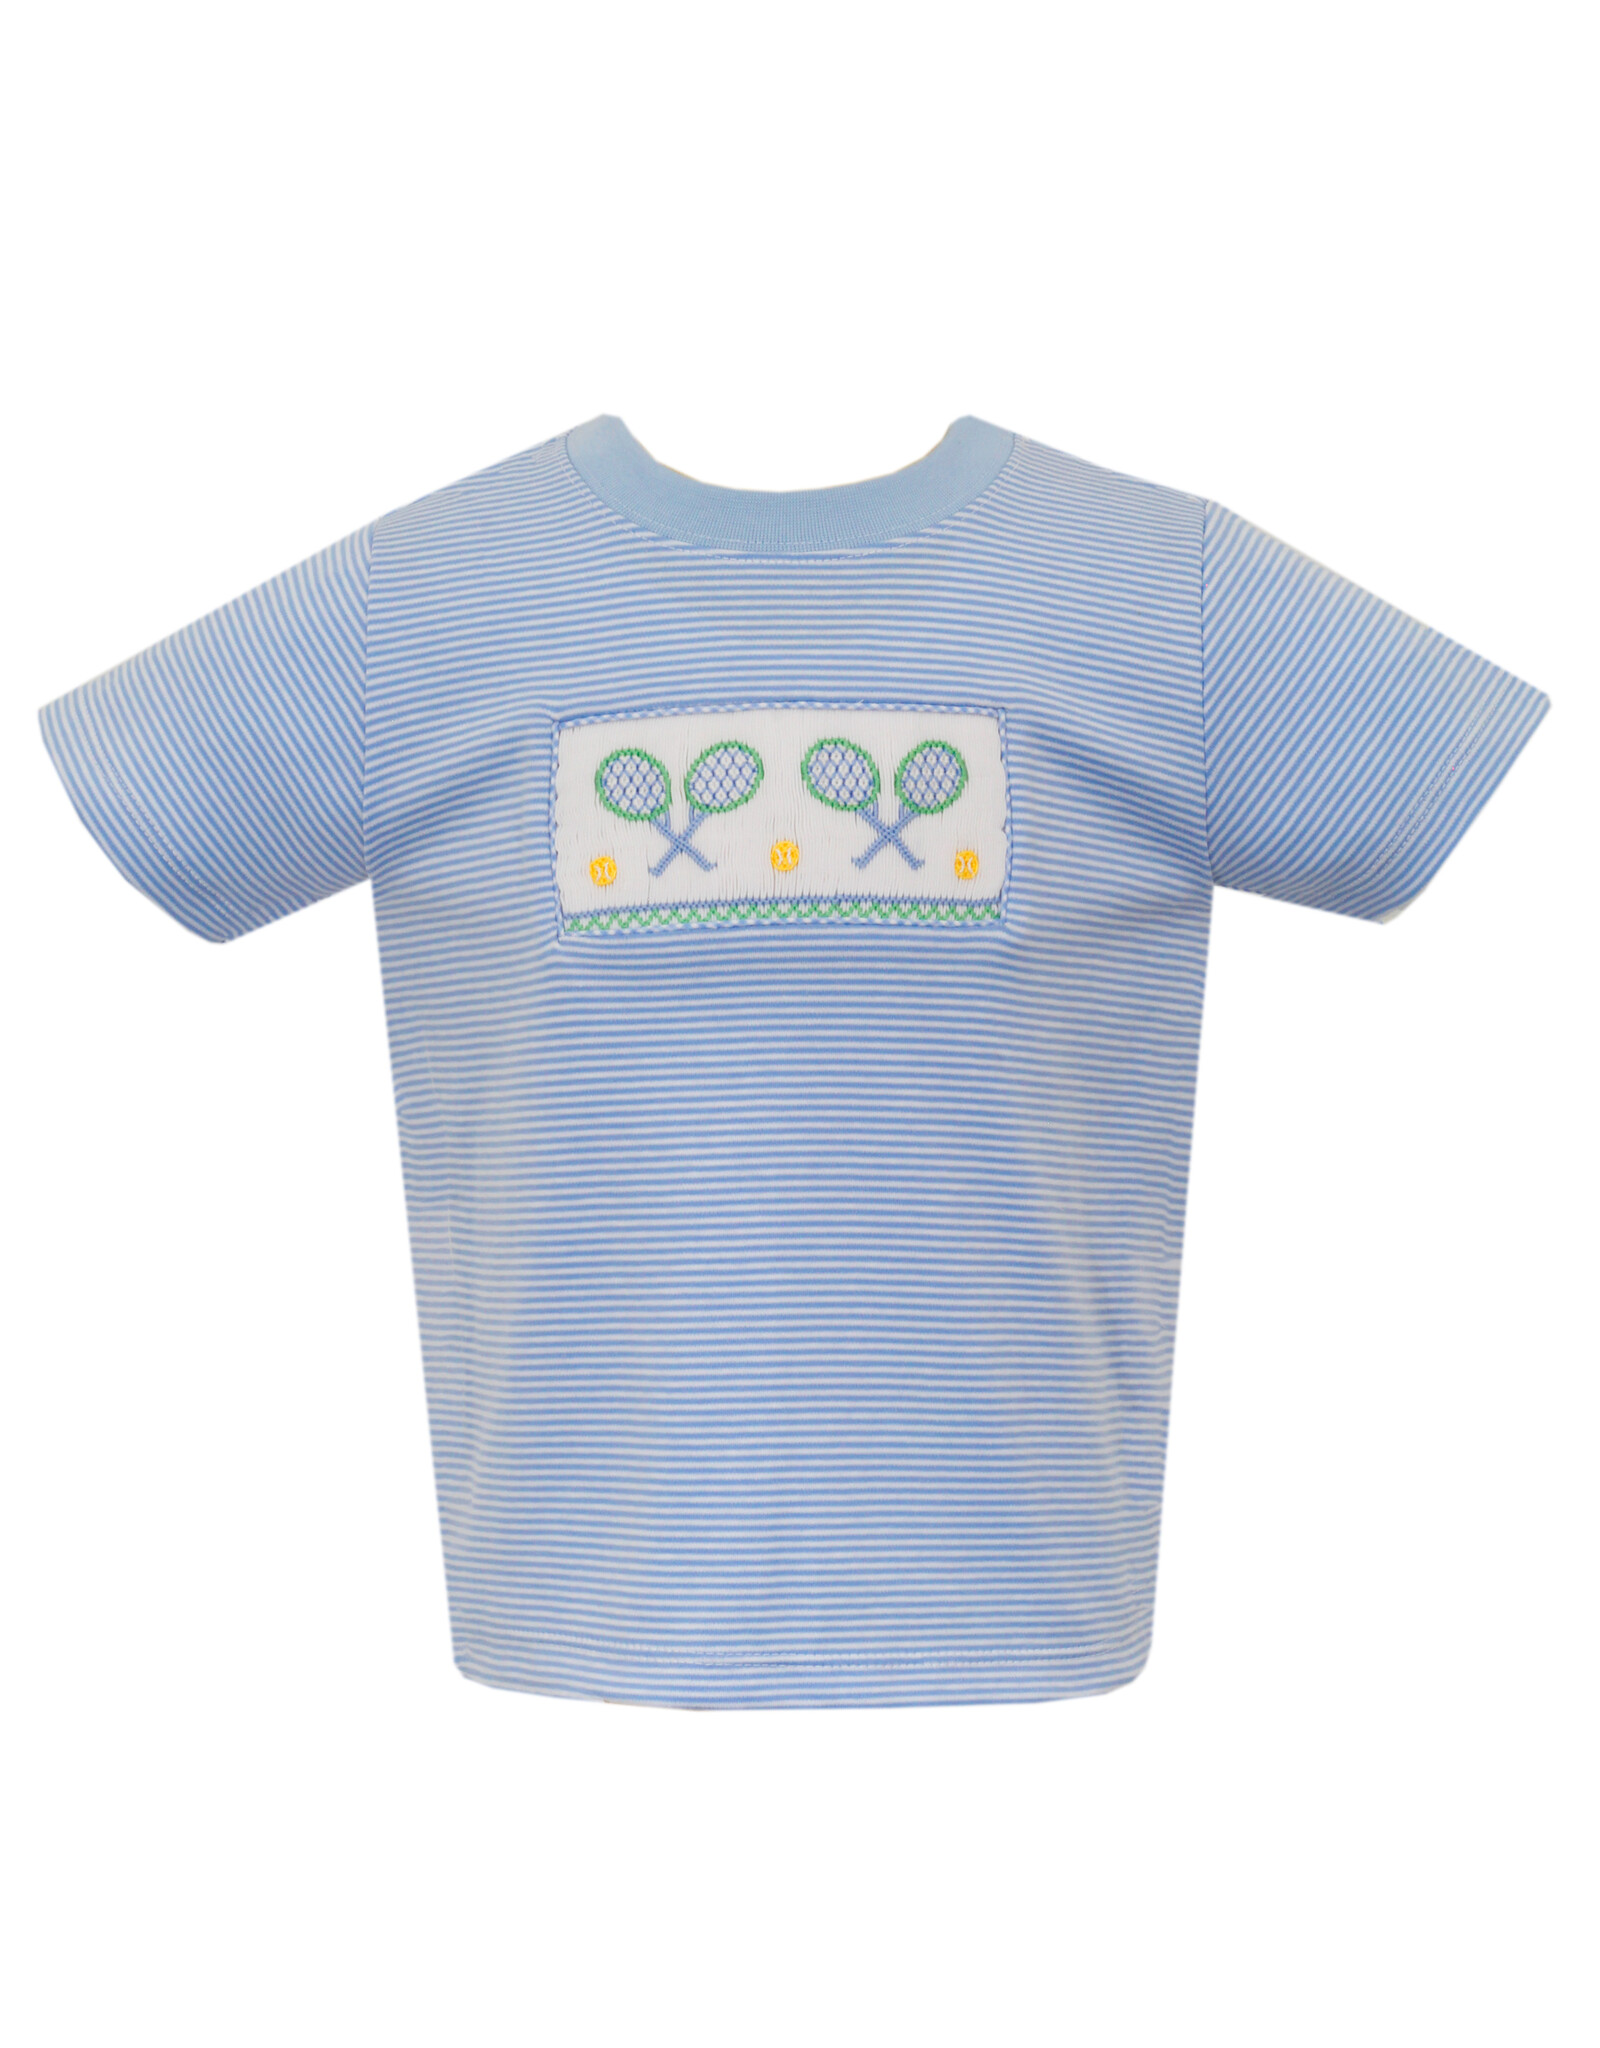 Anavini TENNIS RAQUET - Boy's T-shirt